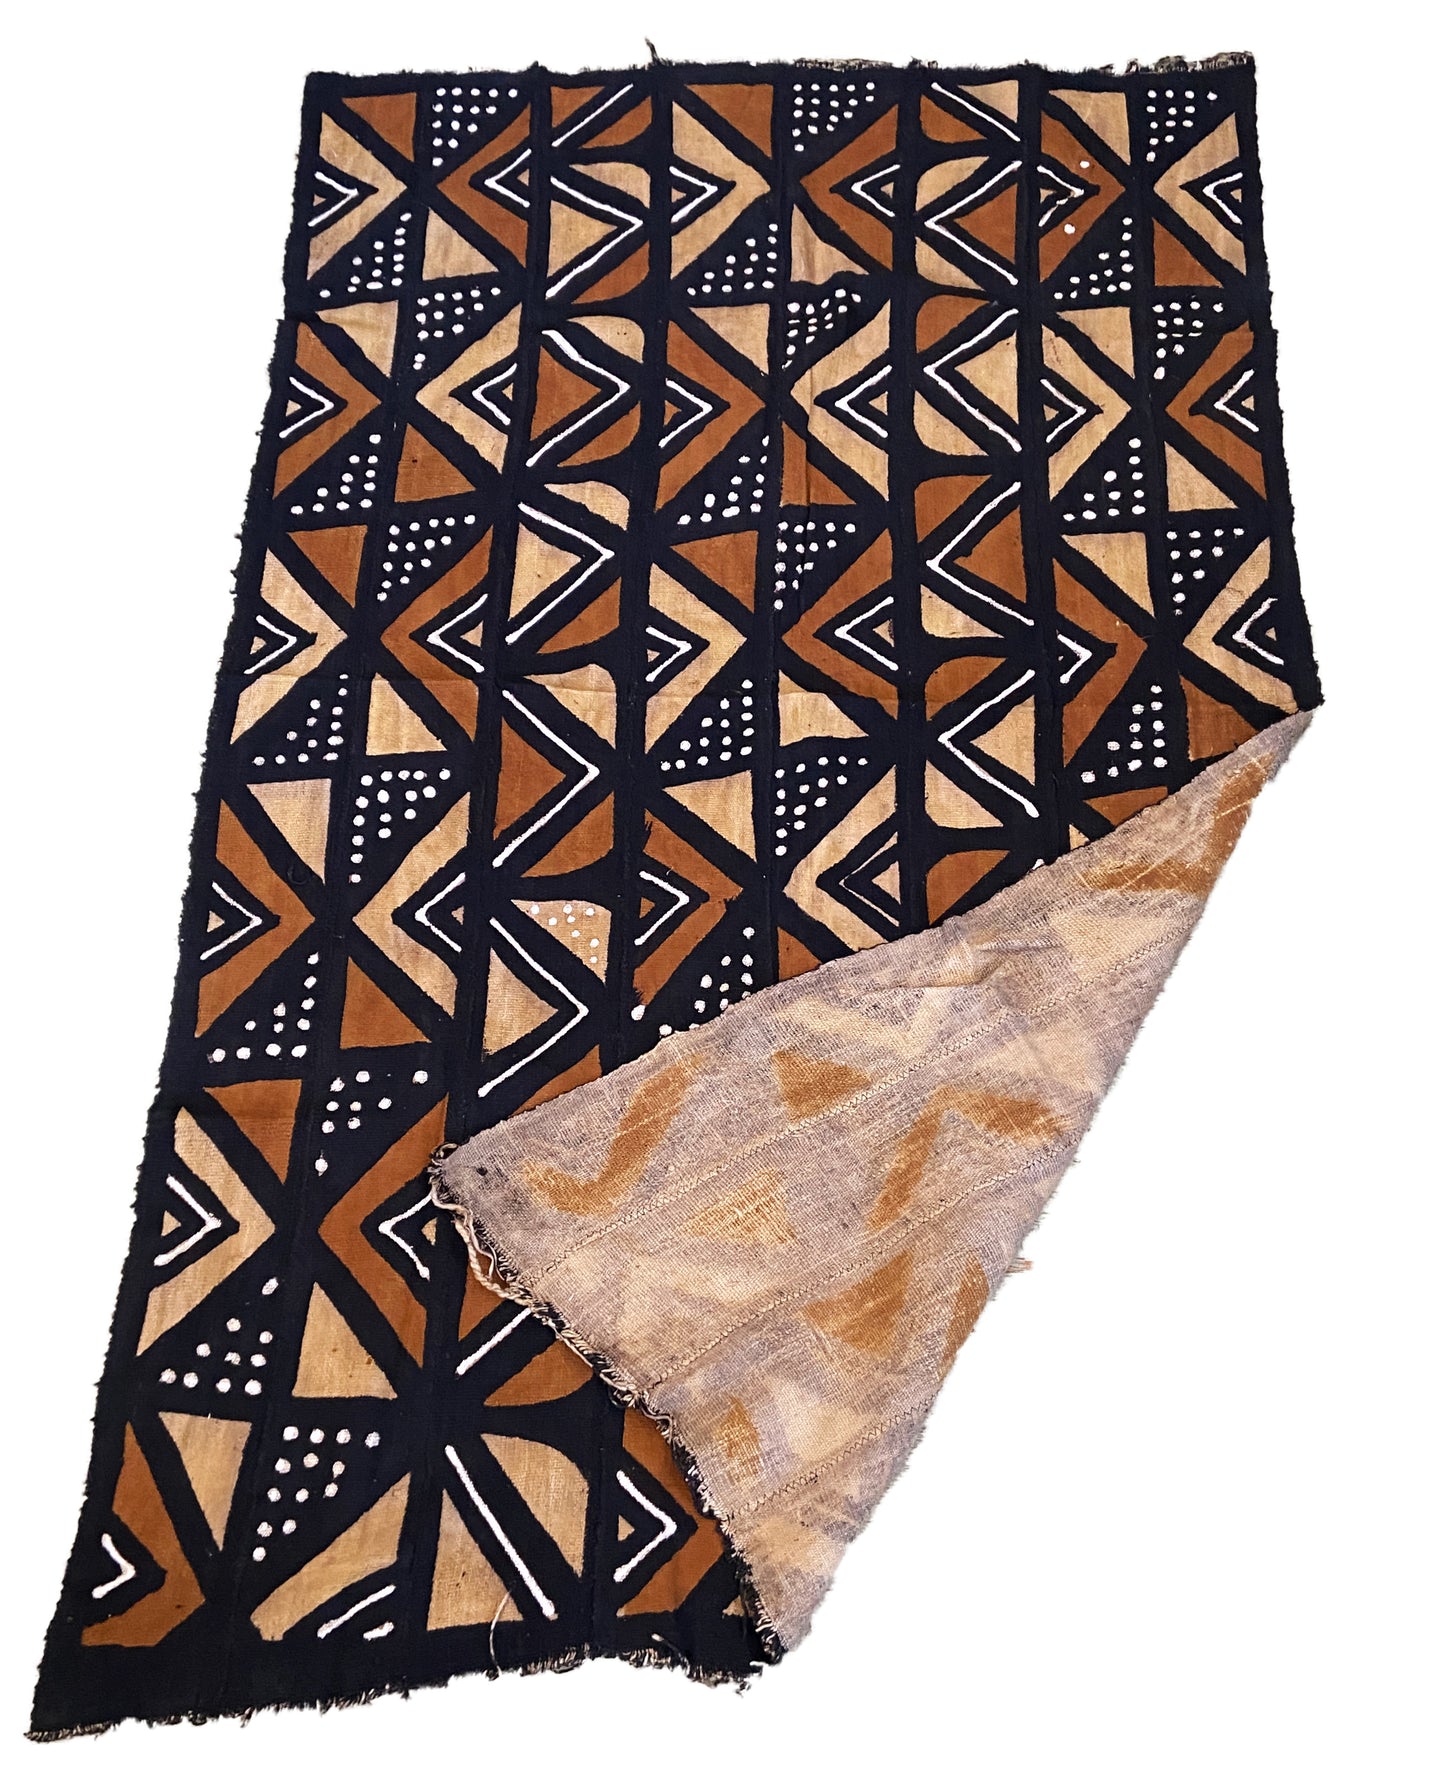 African LG Brown/Mustard/Black/White Mud Cloth/ Blanket Mali 64" by 40" # 1987